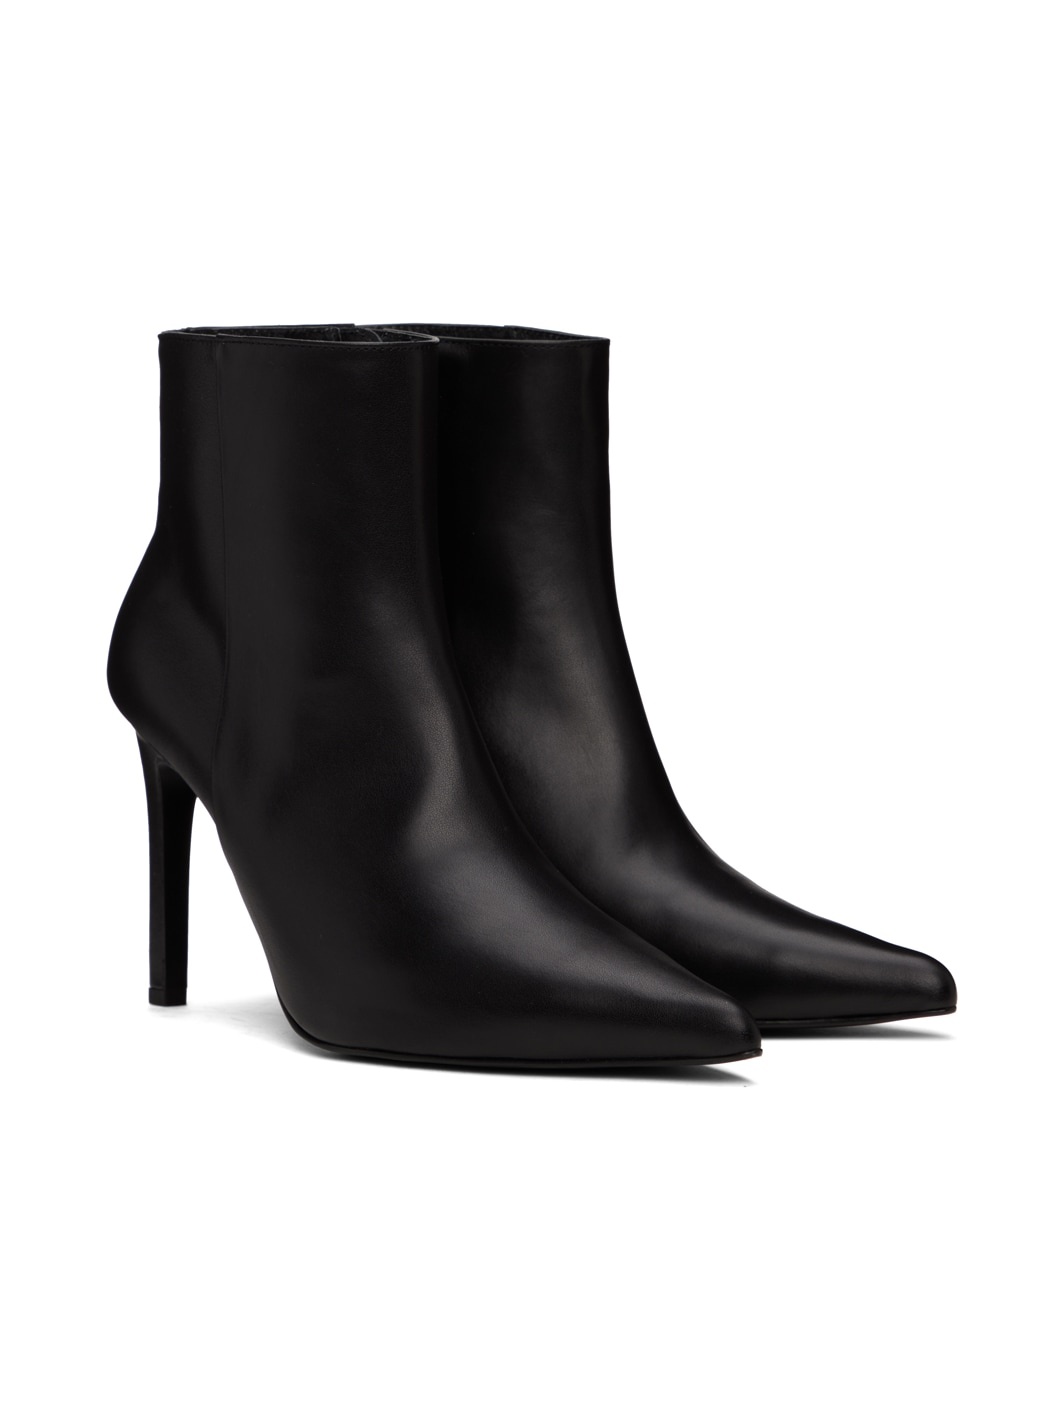 Black Leather Stiletto Boots - 4